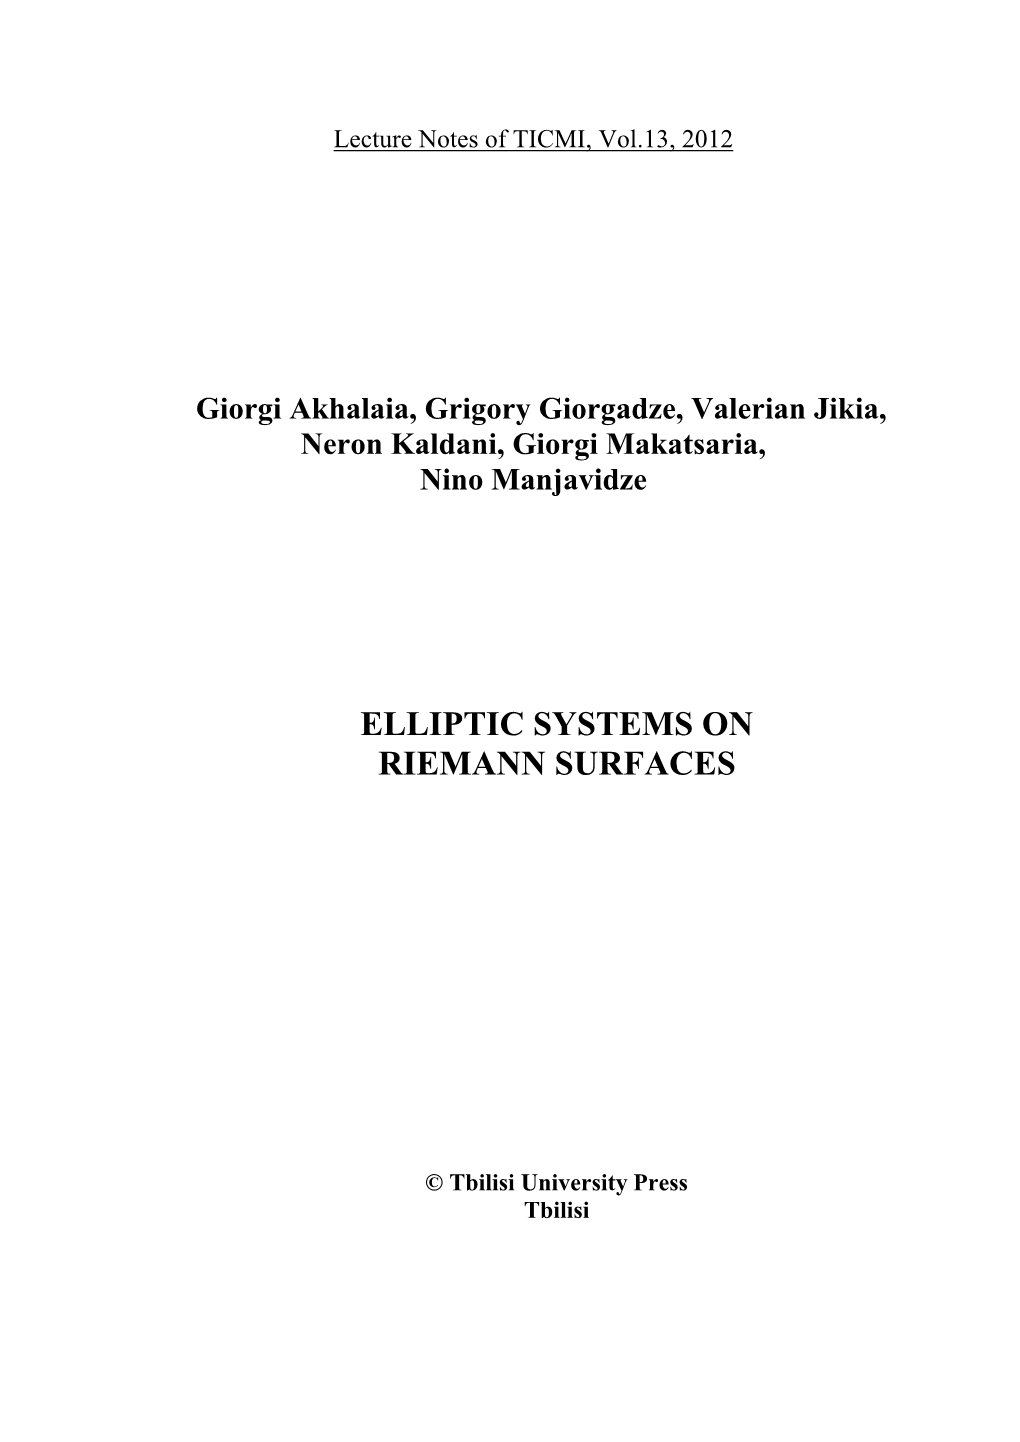 Elliptic Systems on Riemann Surfaces